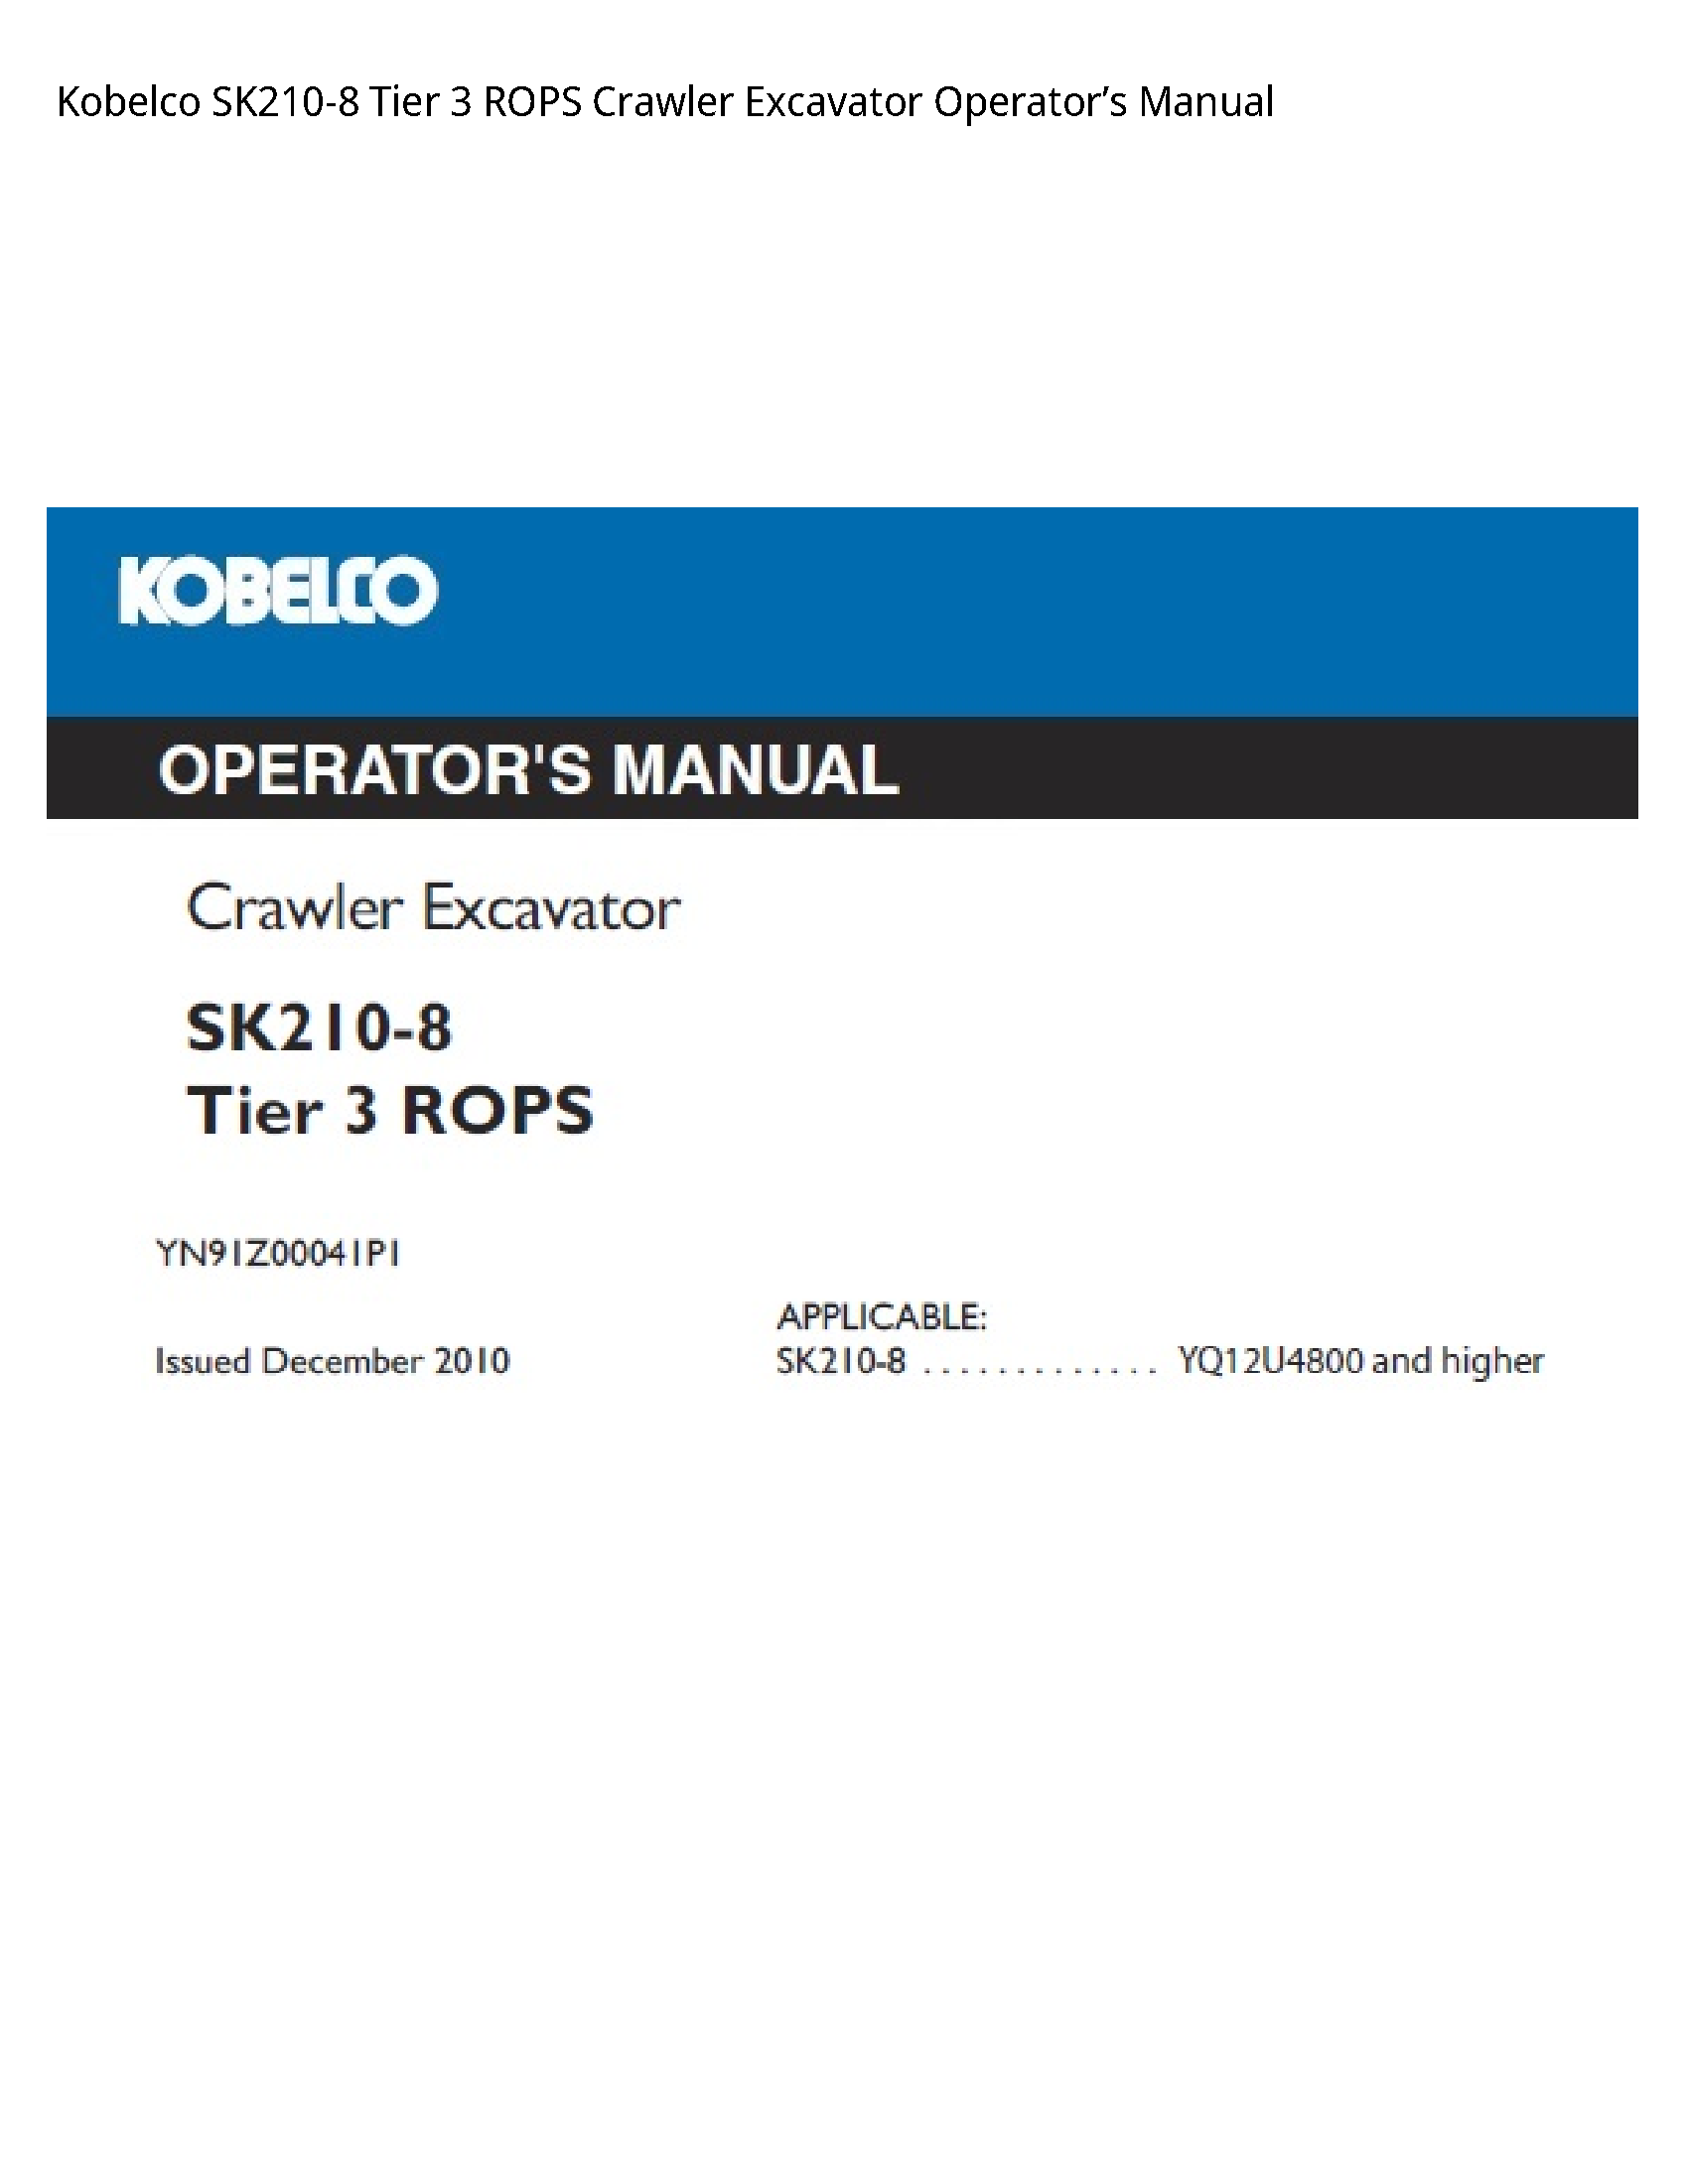 Kobelco SK210-8 Tier ROPS Crawler Excavator Operator’s manual